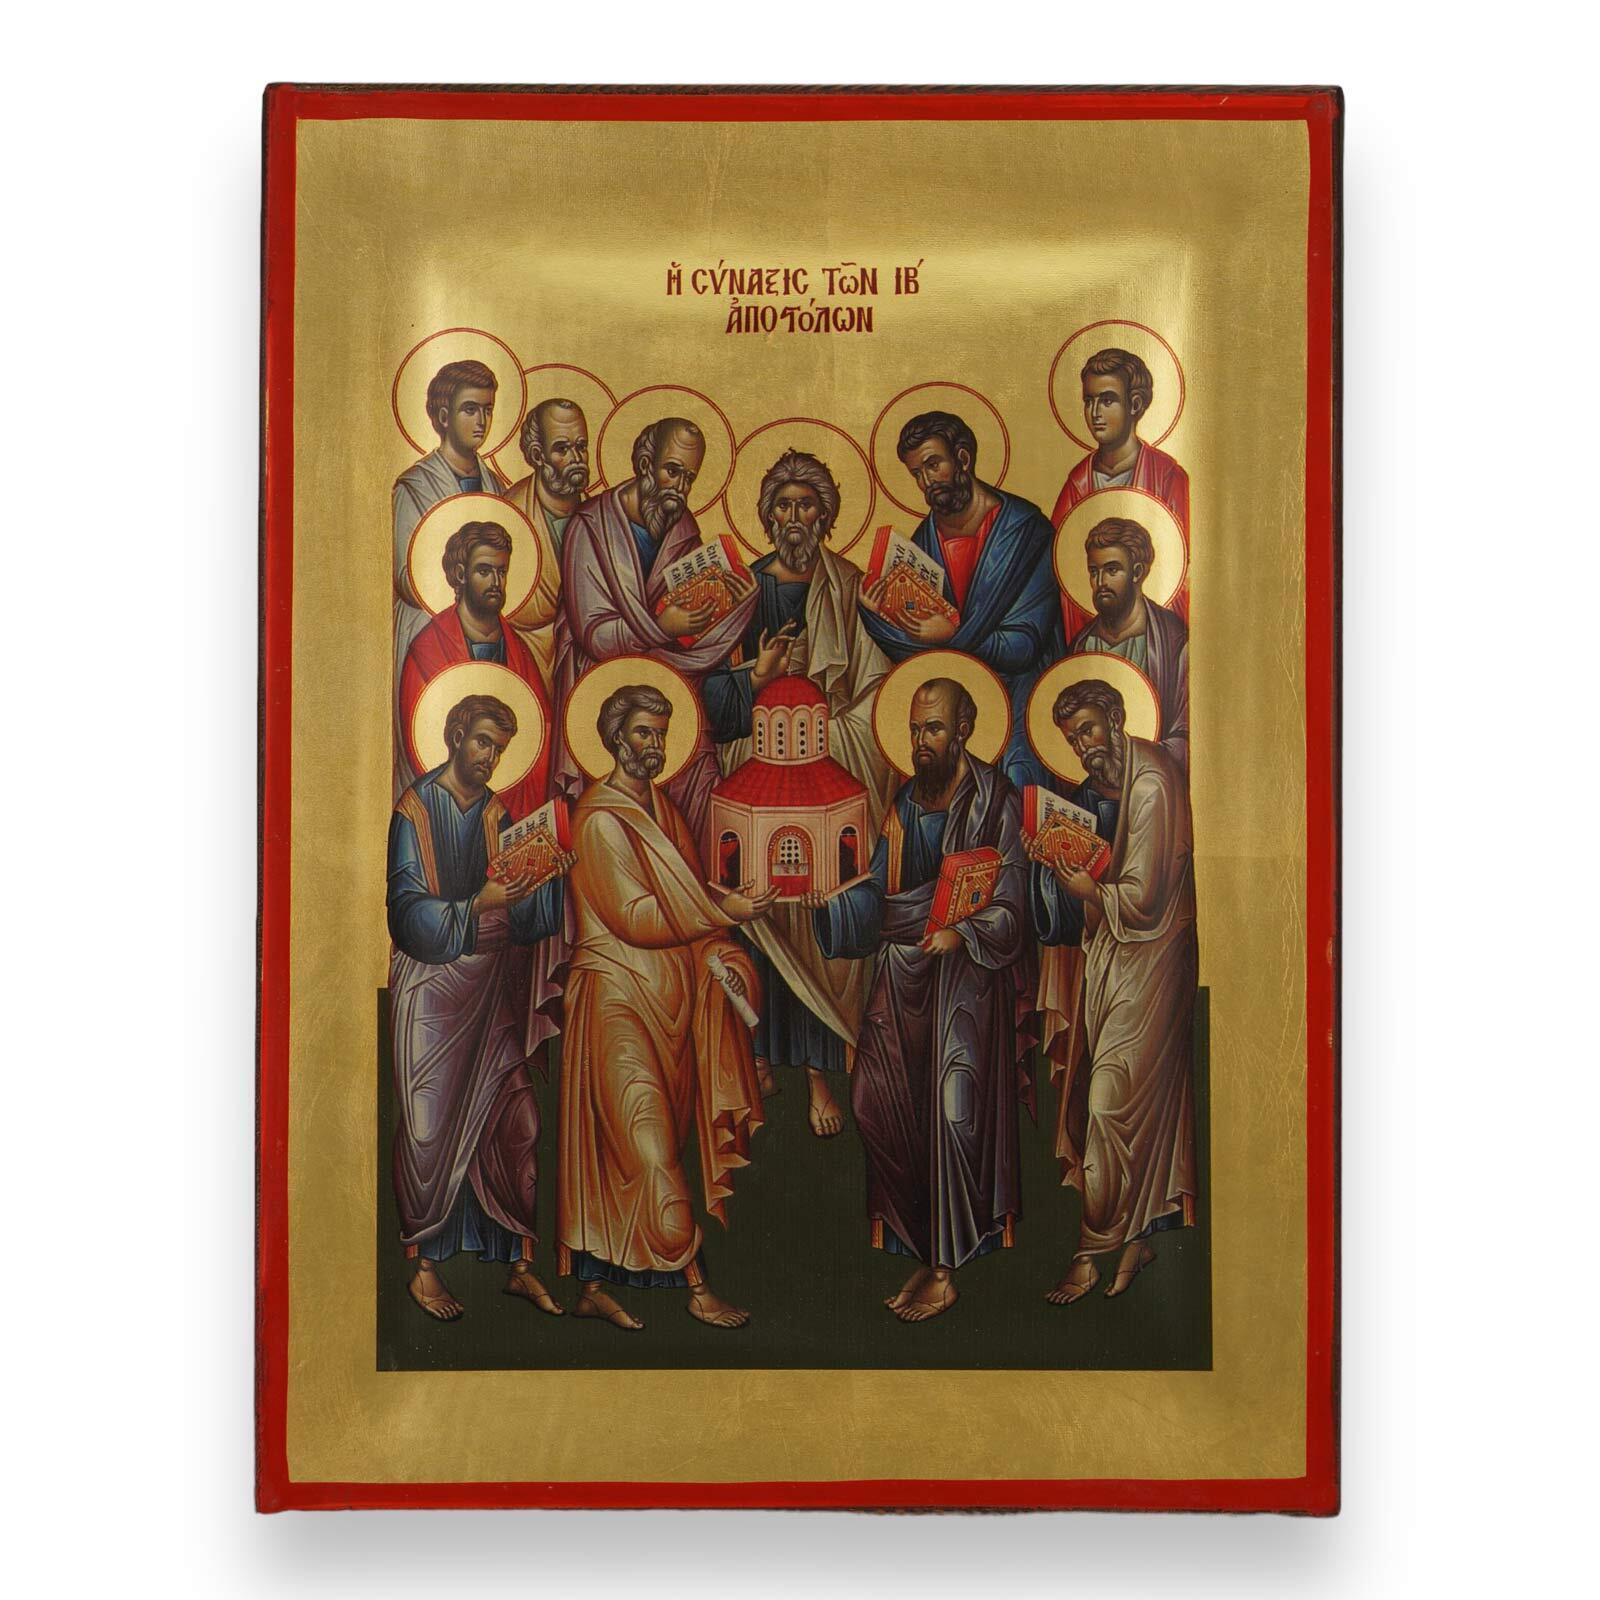 Synaxis of the Apostles Icon - Premium Handmade Greek Orthodox Byzantine Icon